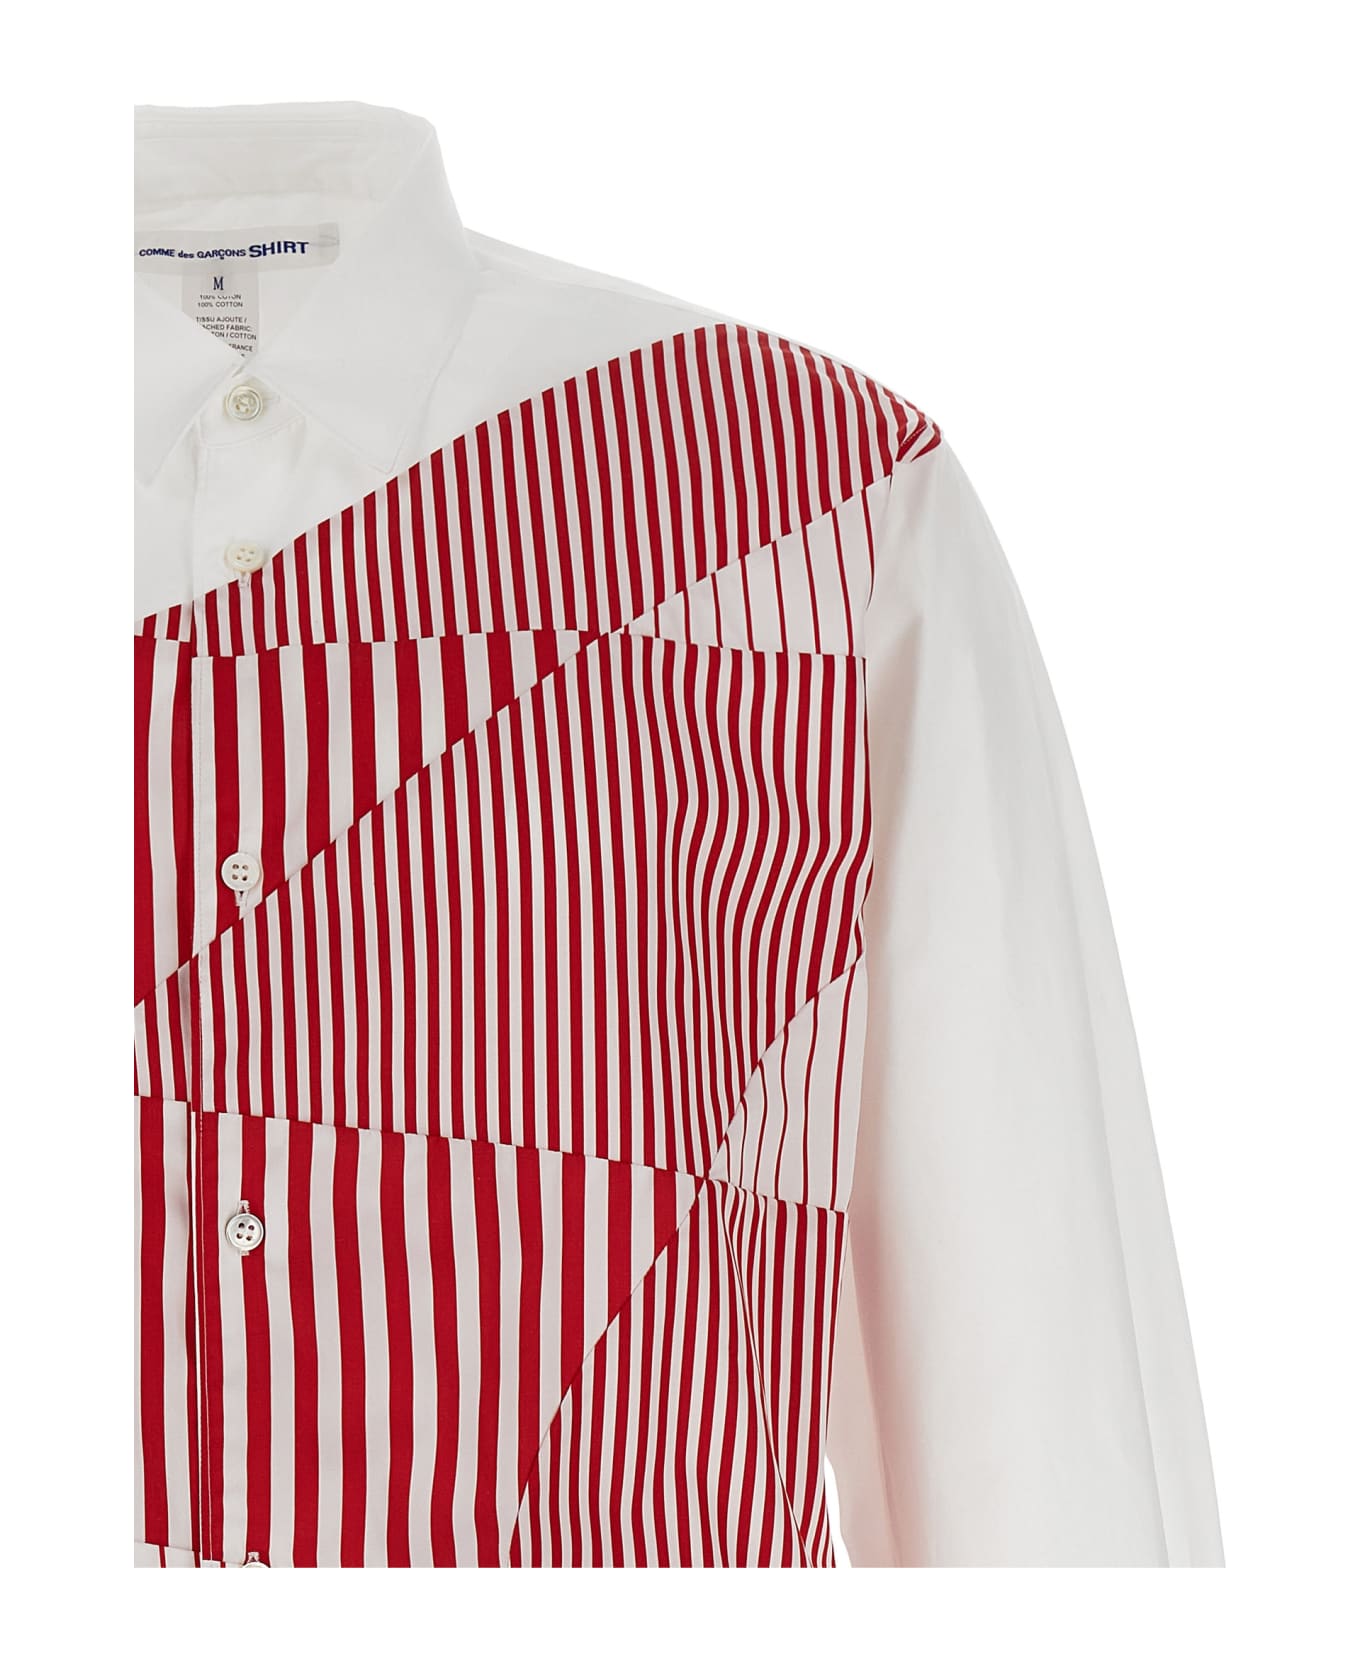 Comme des Garçons Shirt Striped Patterned Shirt - White